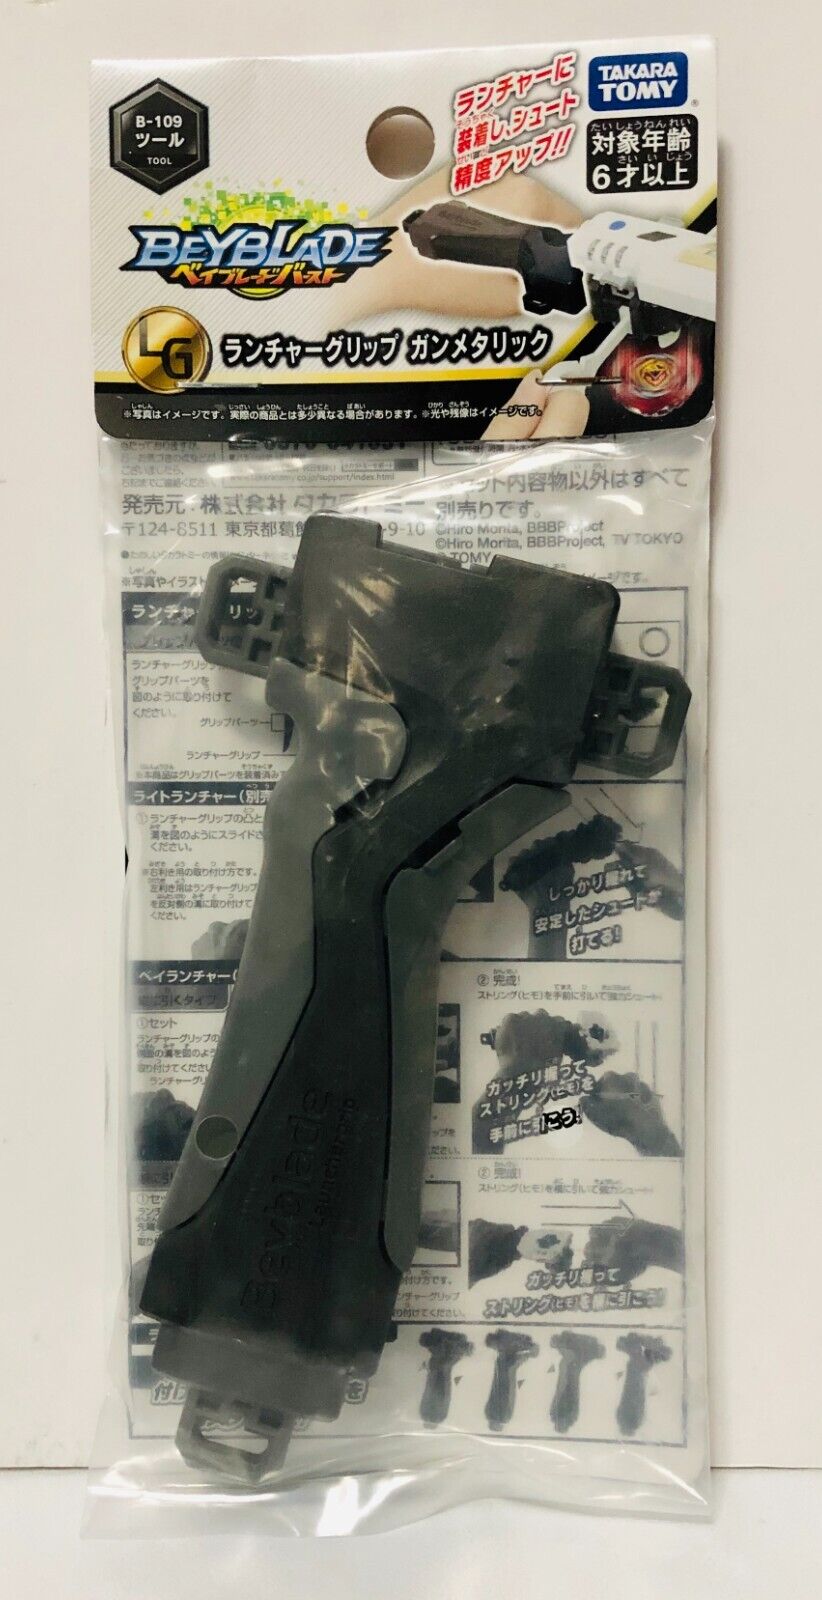 Takara Tomy Beyblade Burst B-109 Launcher Grip Gun Metallic Black US Seller NEW